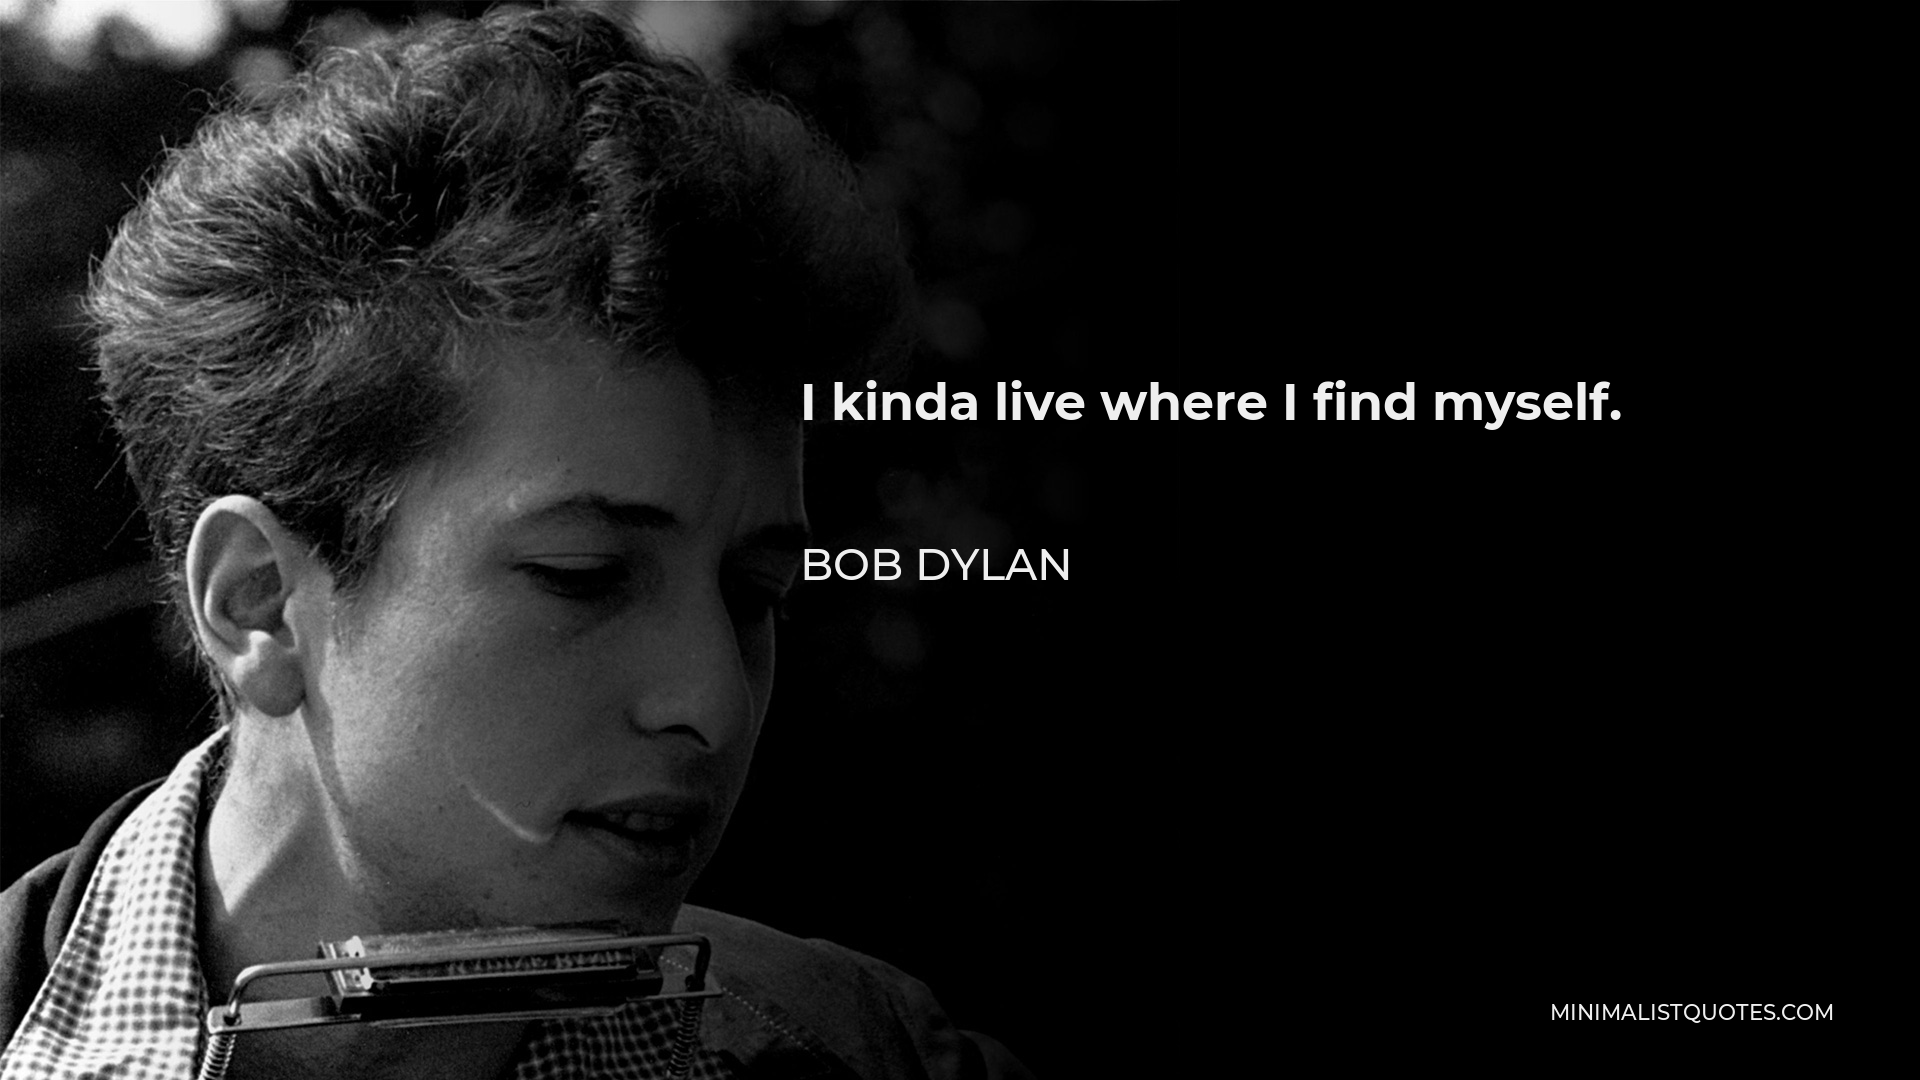 Bob Dylan Quote - I kinda live where I find myself.